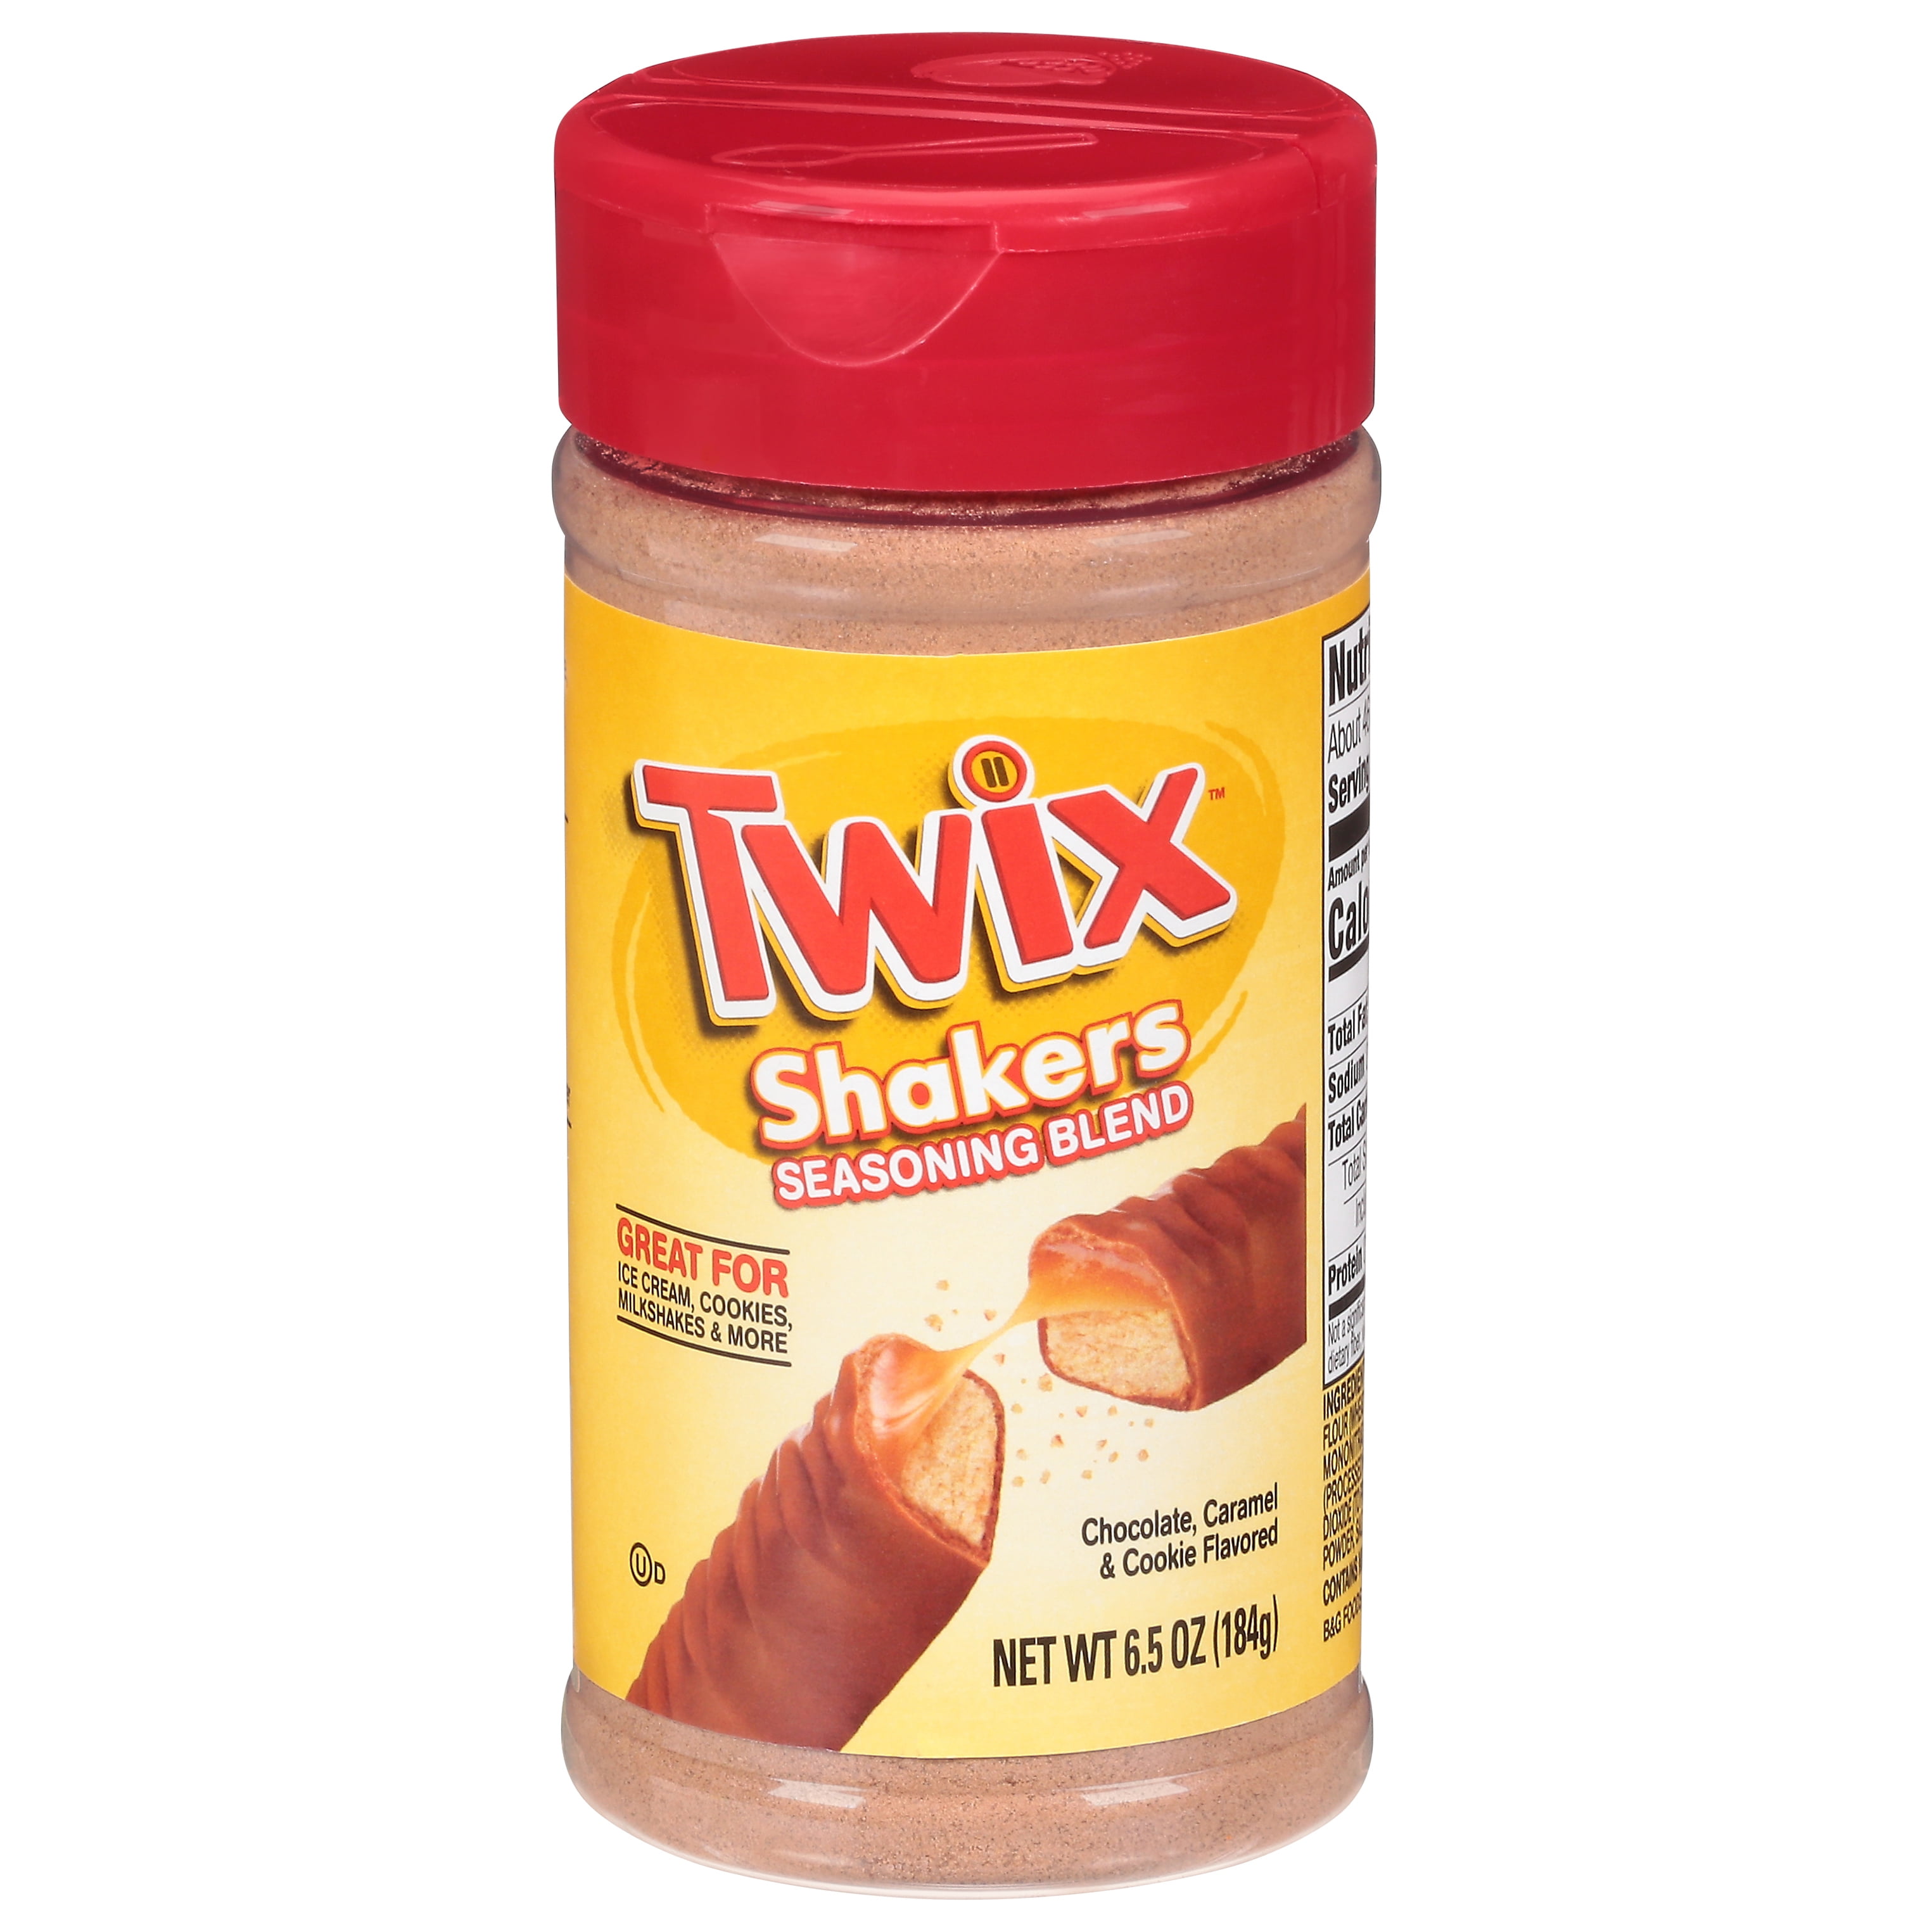 Restaurant Twix Shakers Seasoning Blend (13.5 oz.) Value 2 PACK